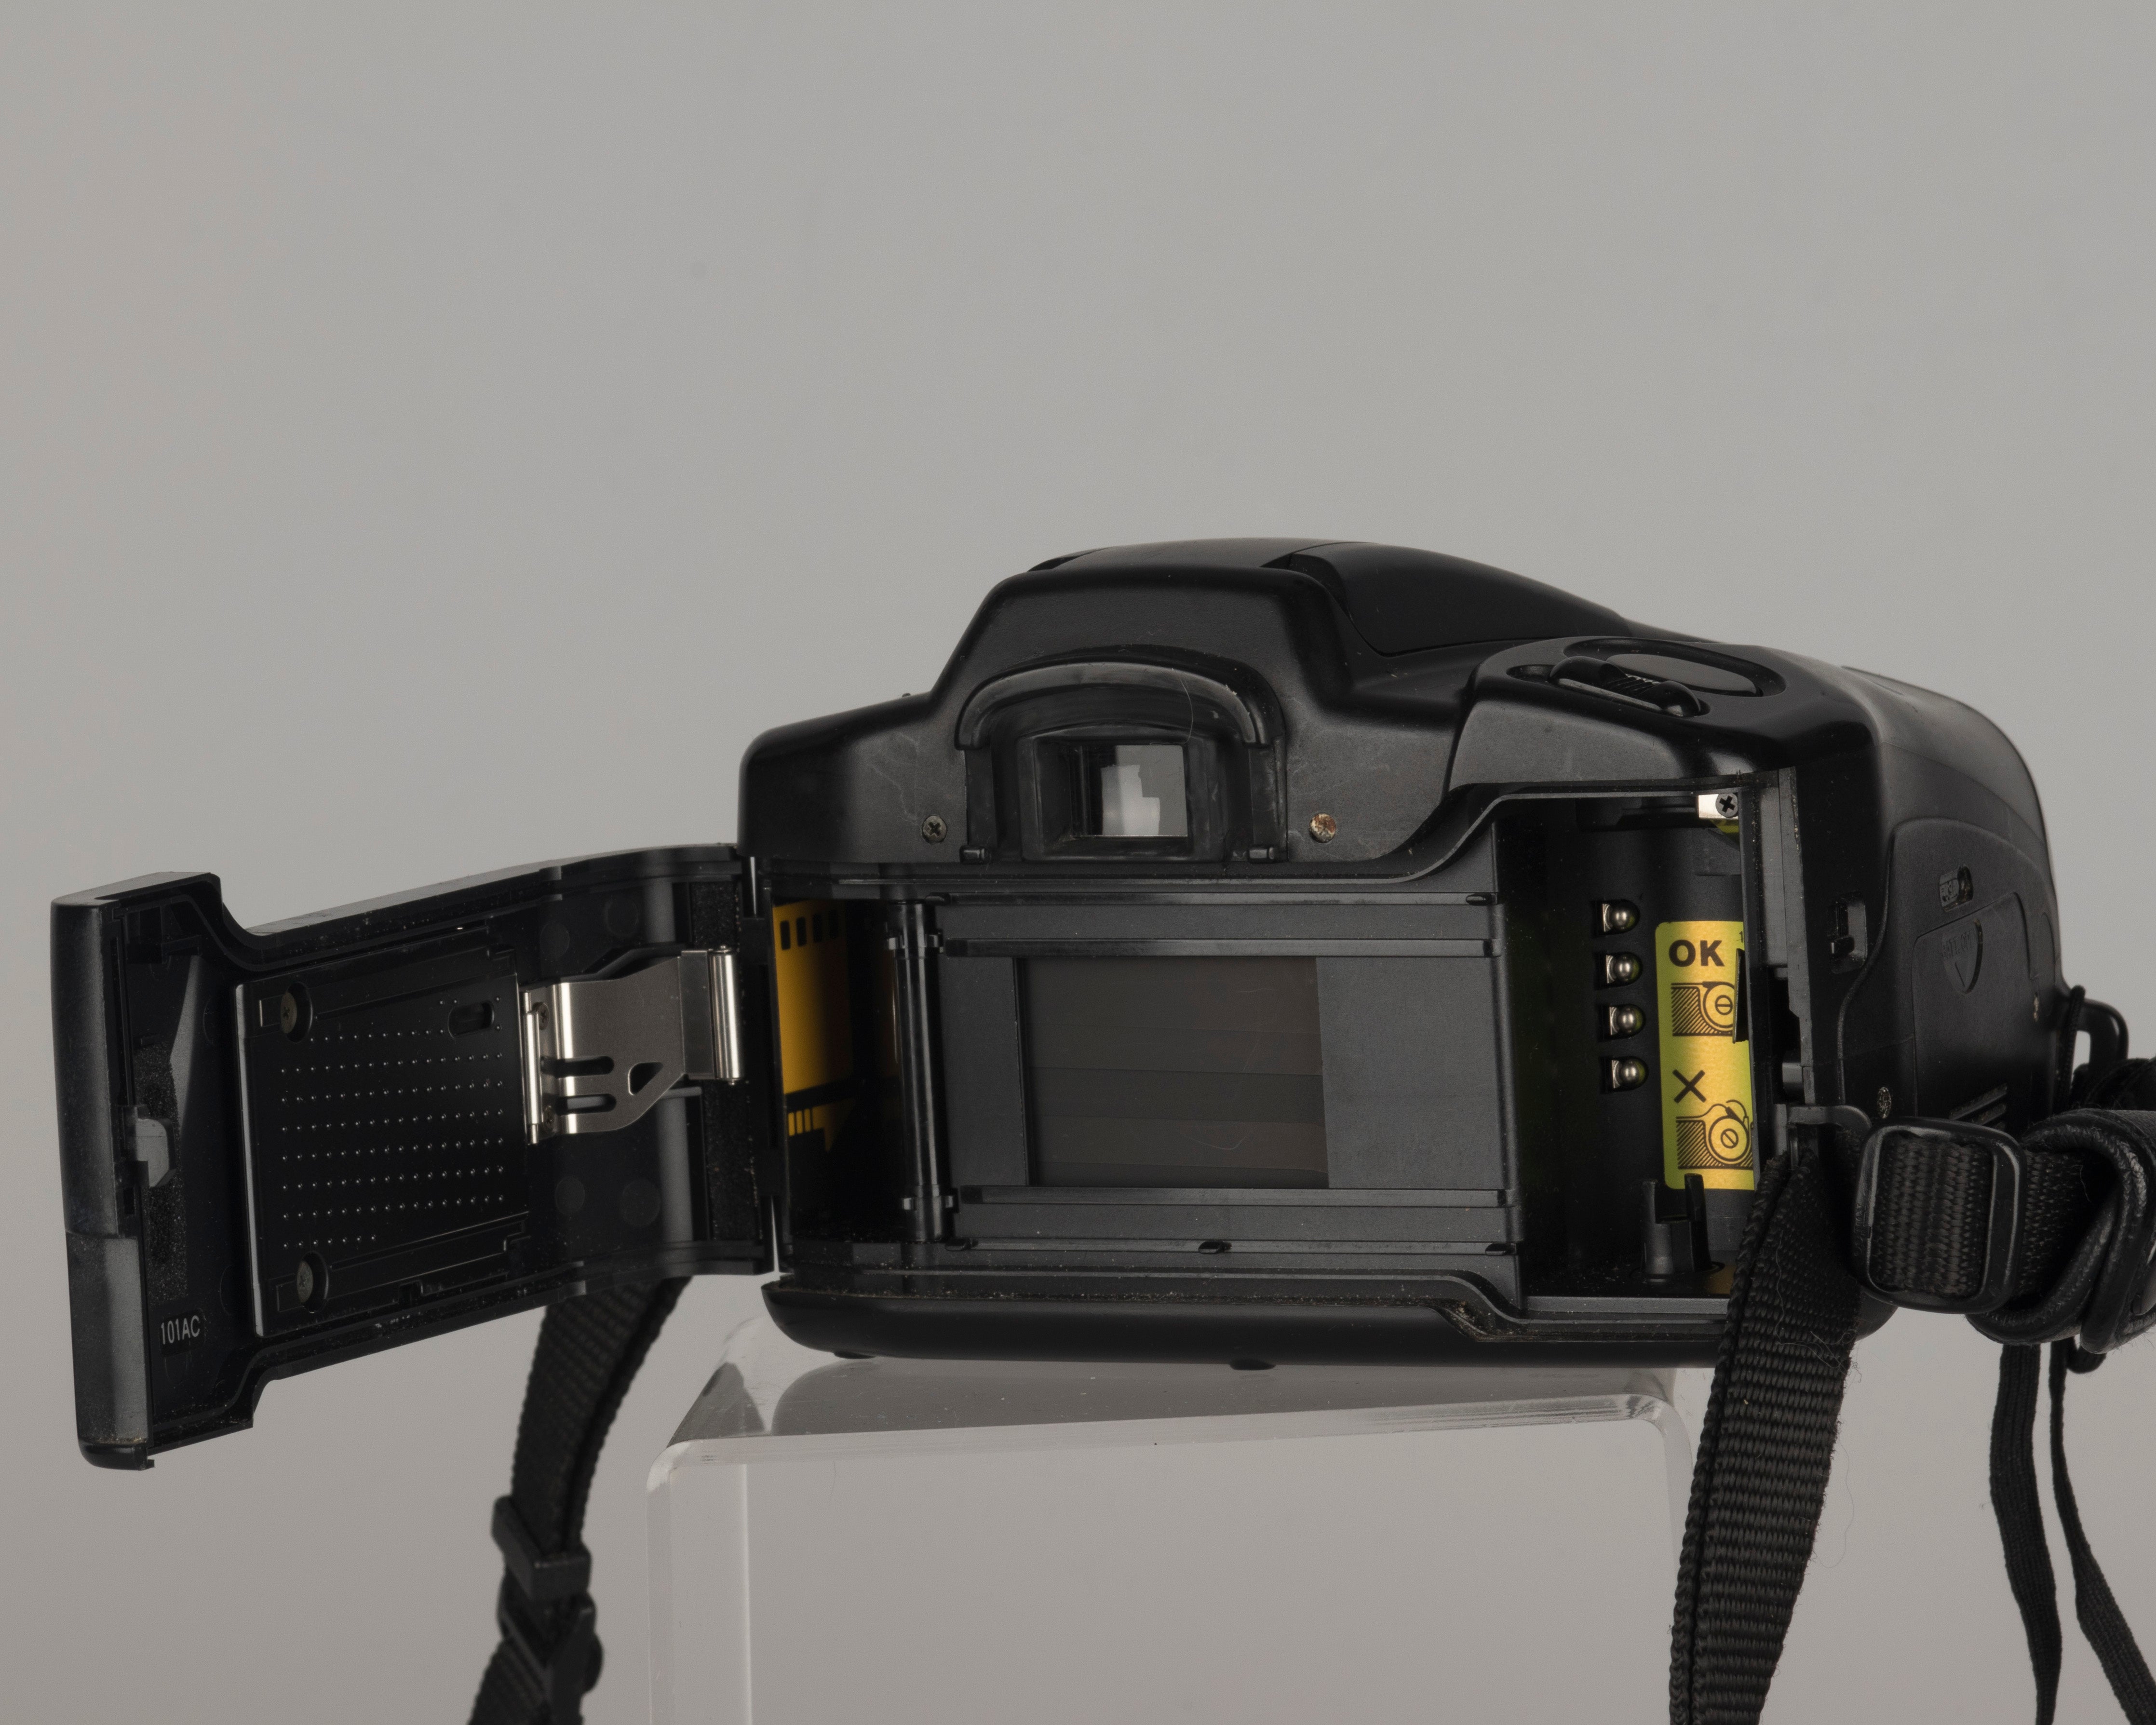 Chinon Genesis III 'bridge' 35mm film SLR with 38-110mm lens